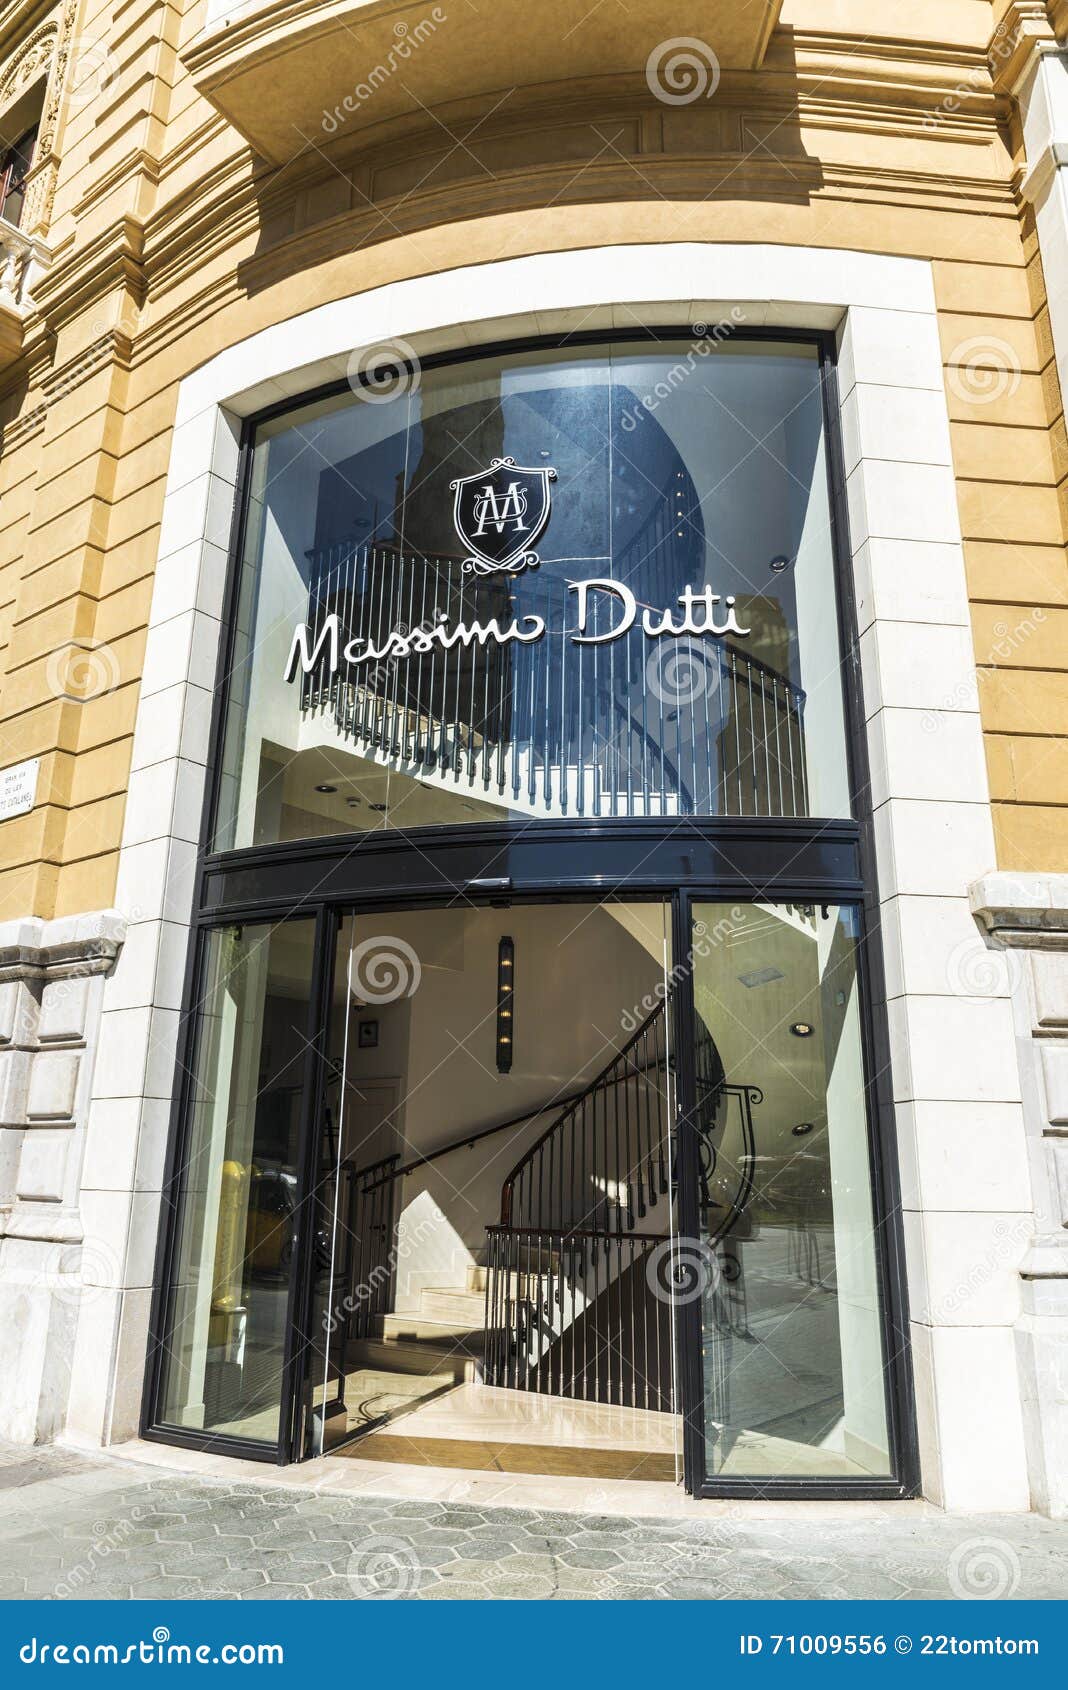 Massimo Dutti Store in Barcelona Editorial Photo - Image of retail,  shopaholic: 71009556